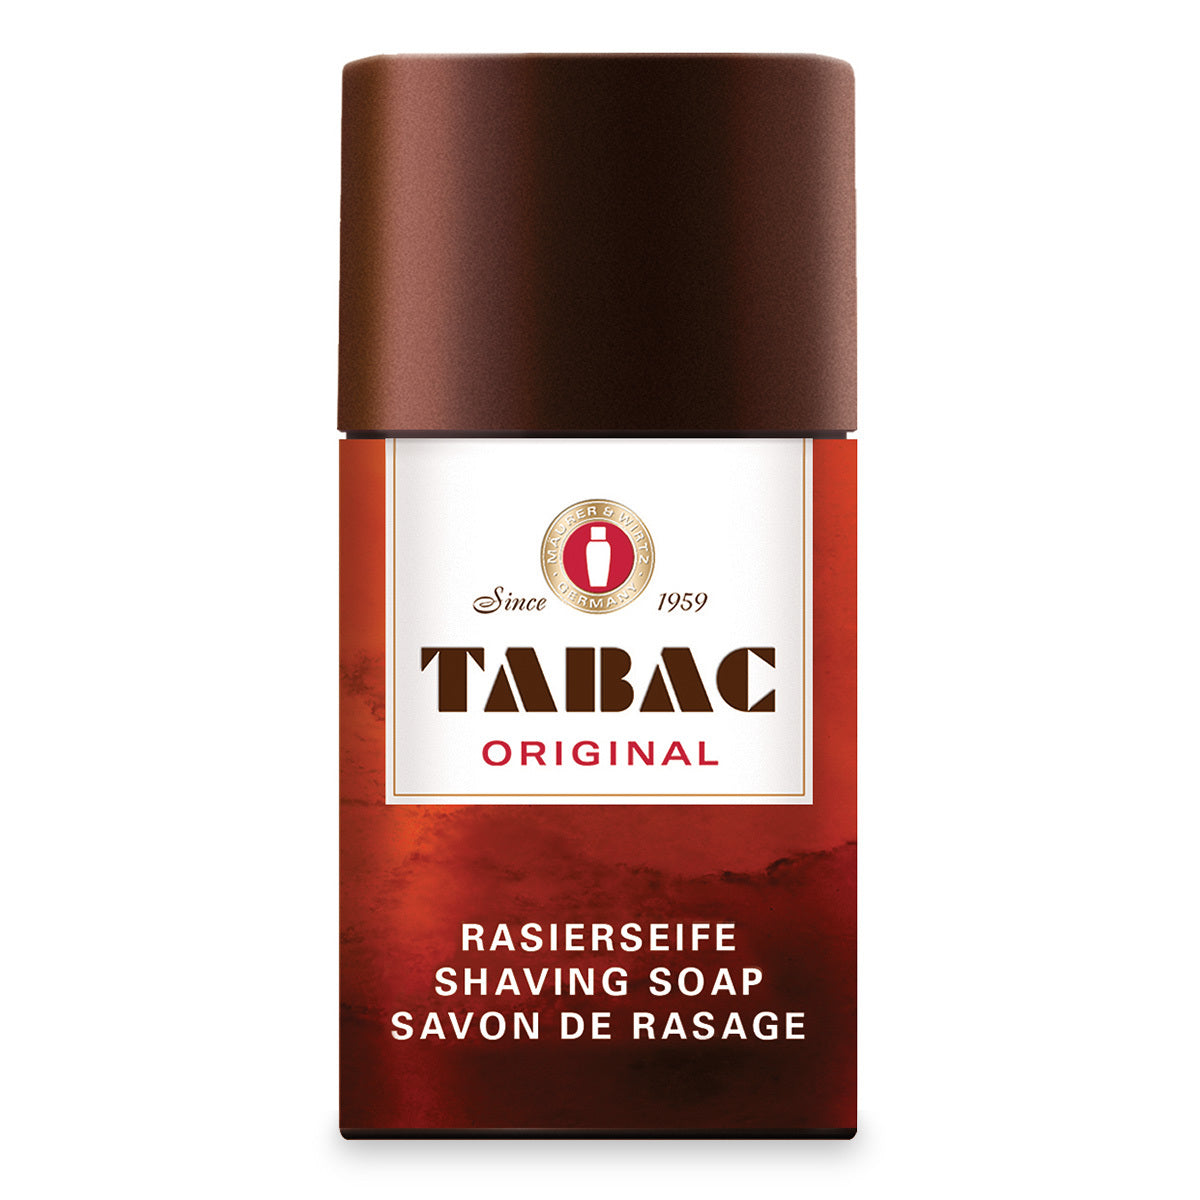 Primary image of Tabac Original Shaving Soap Stick